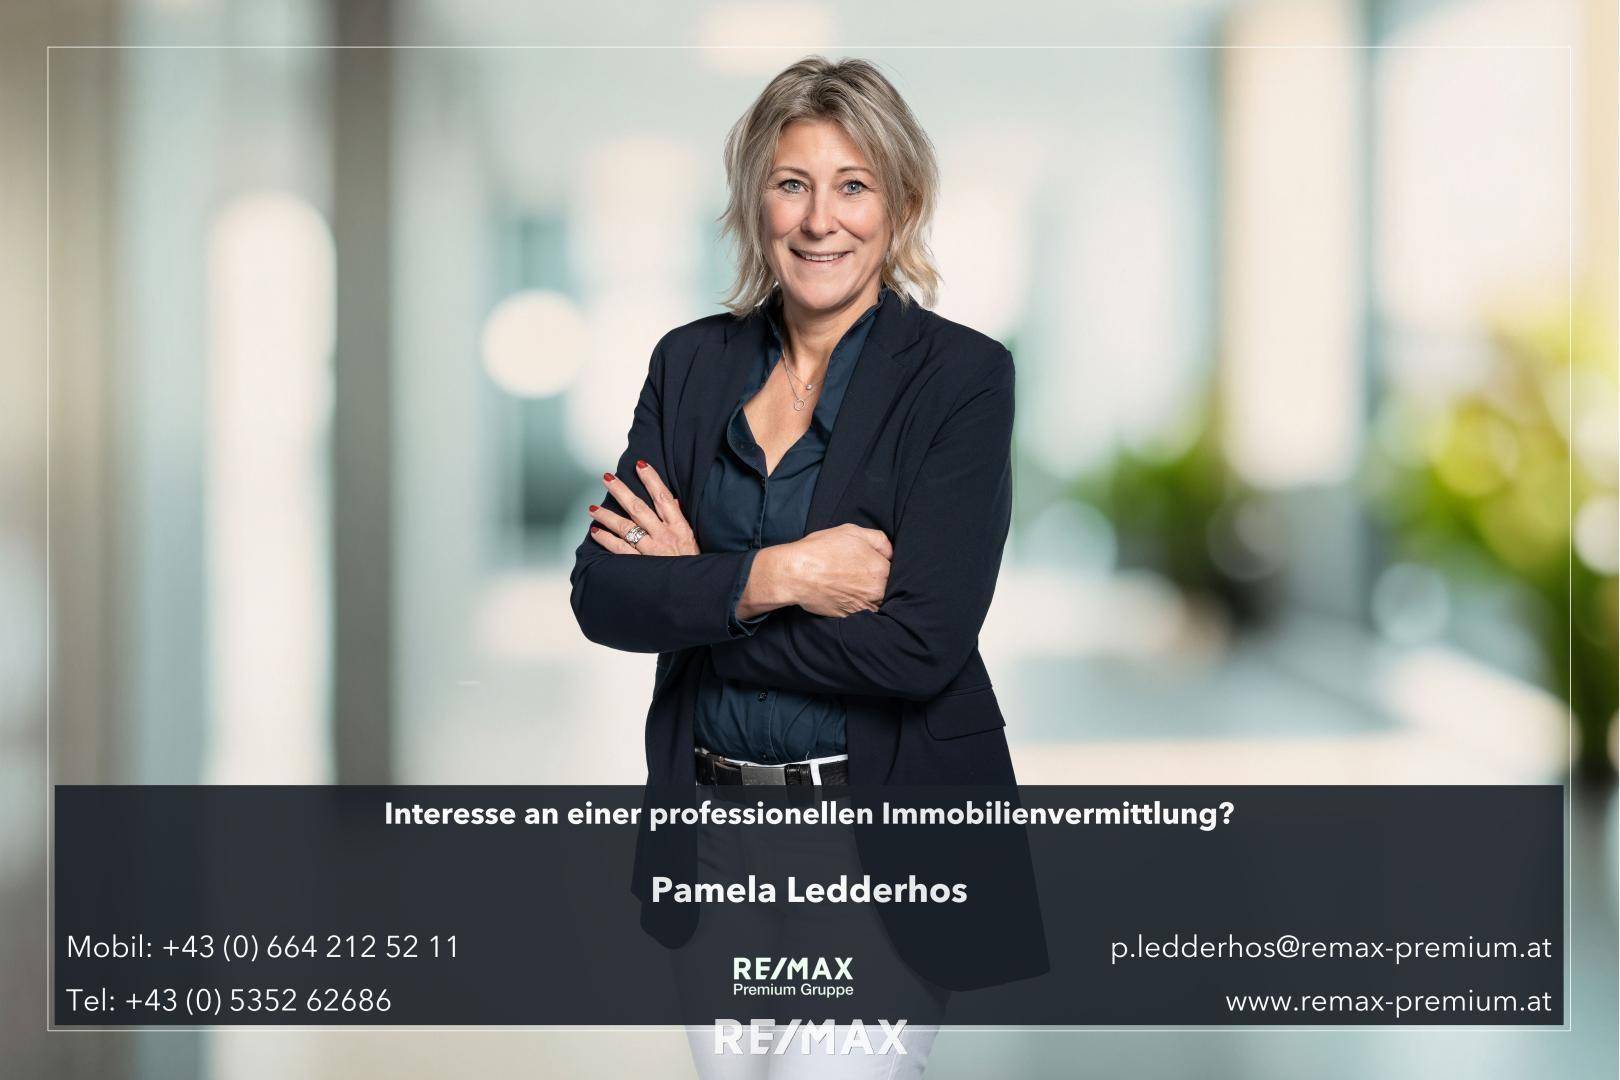 Pamela Ledderhos #remaxpremium